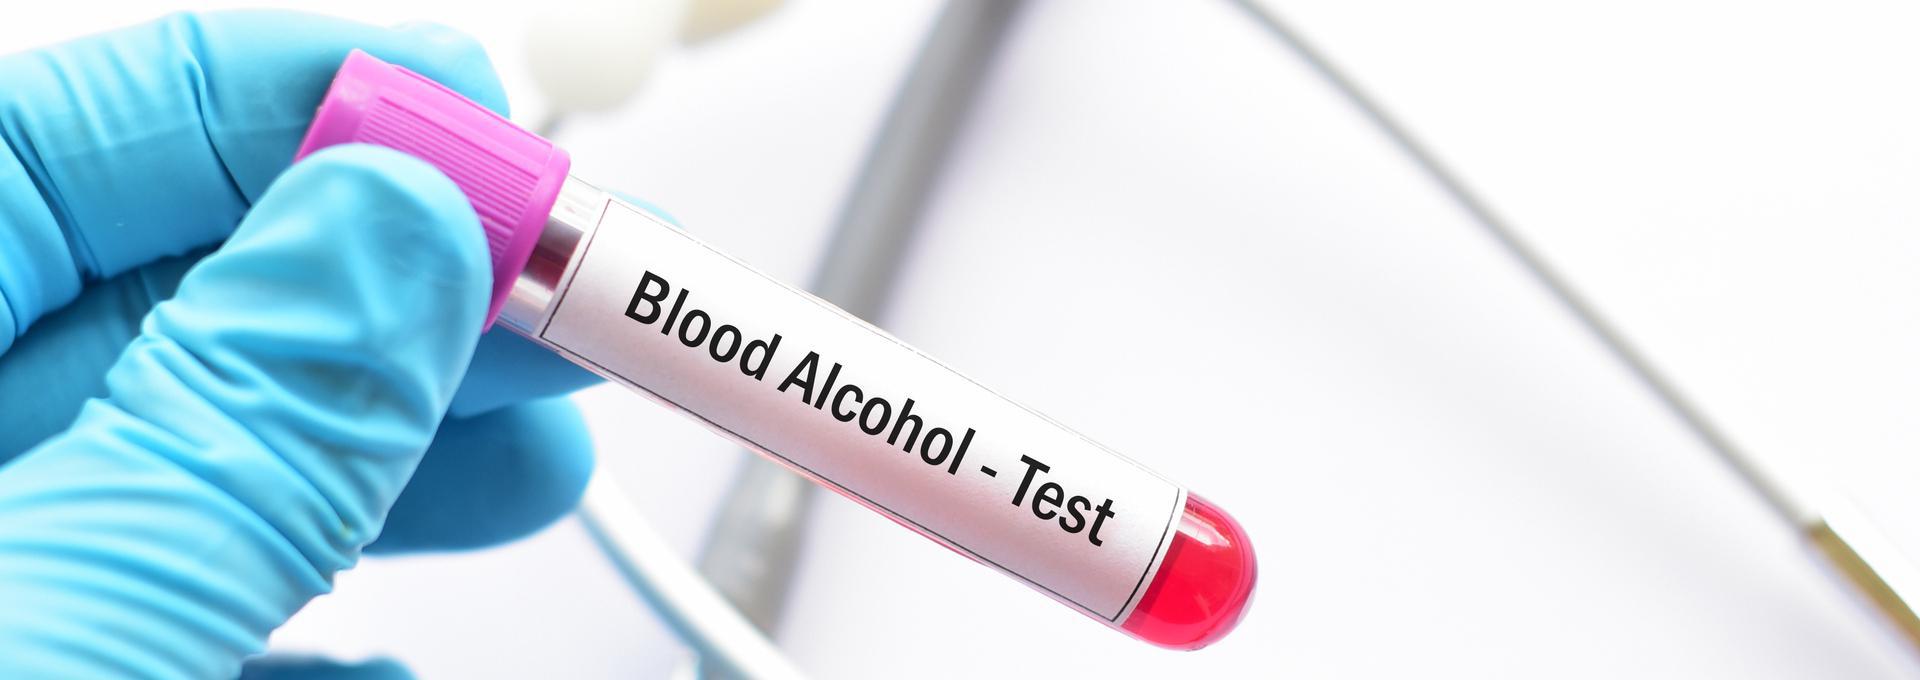 Peth Alcohol Testing - info-hero